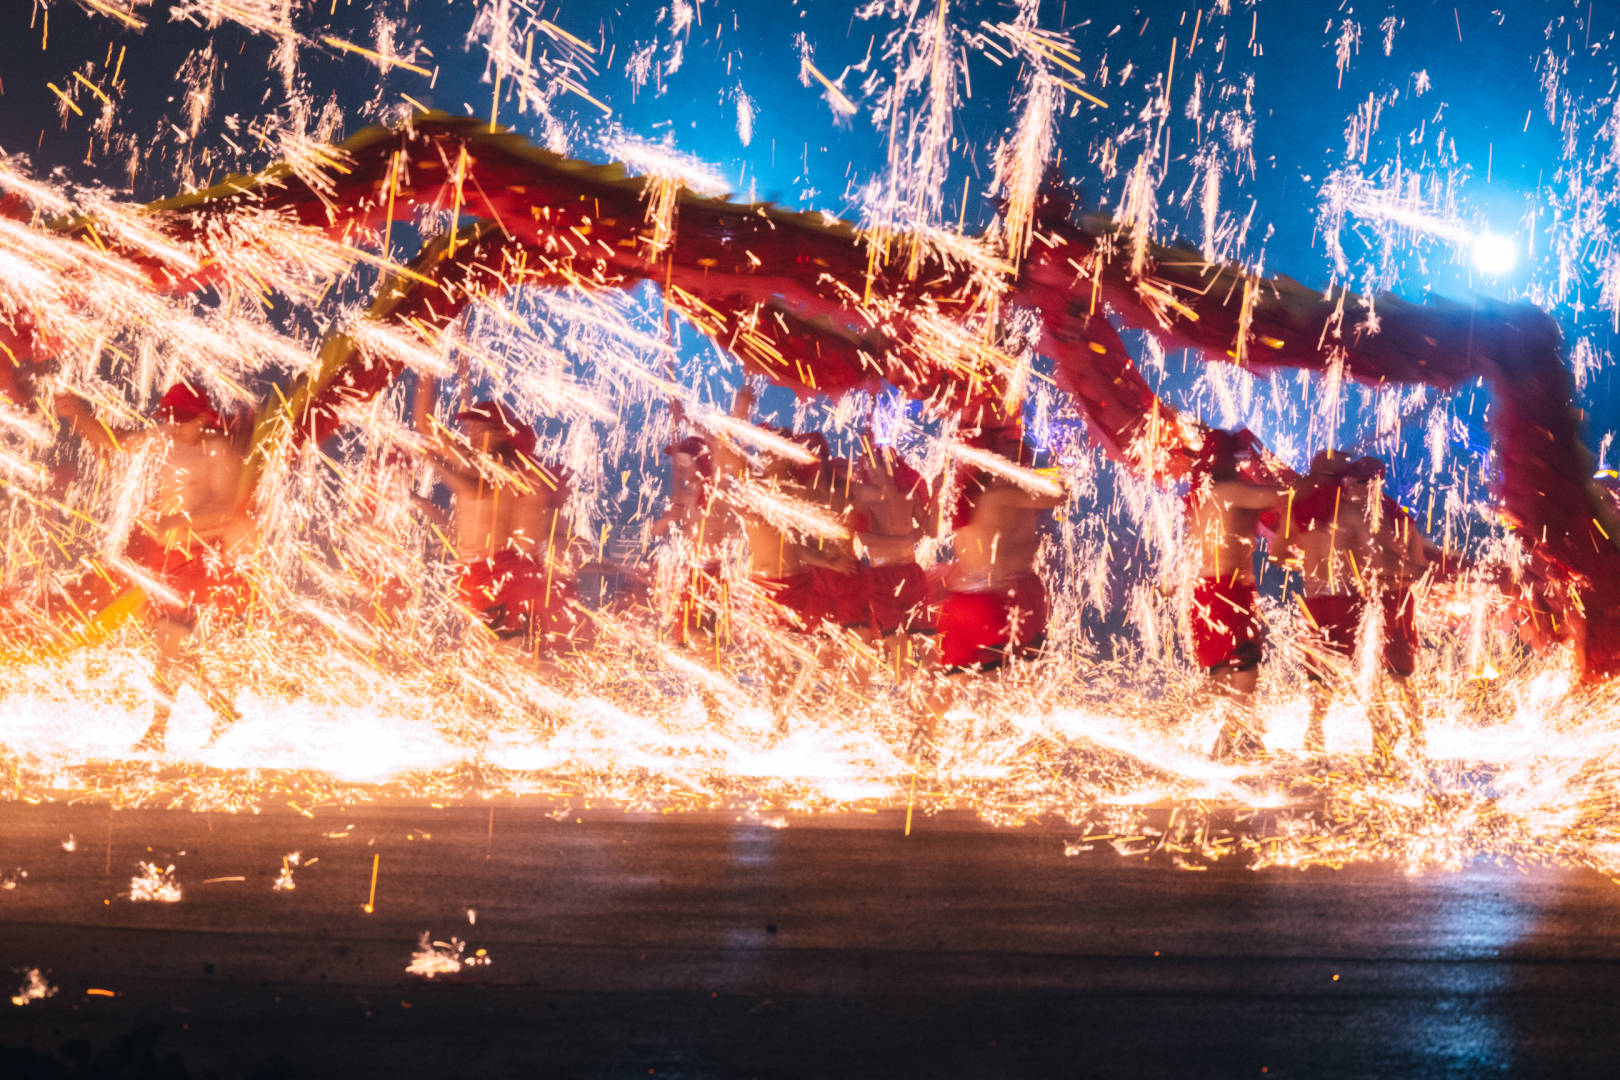 The Fire Dragon Dance at Tongliang Dragon Lights Art Festival.